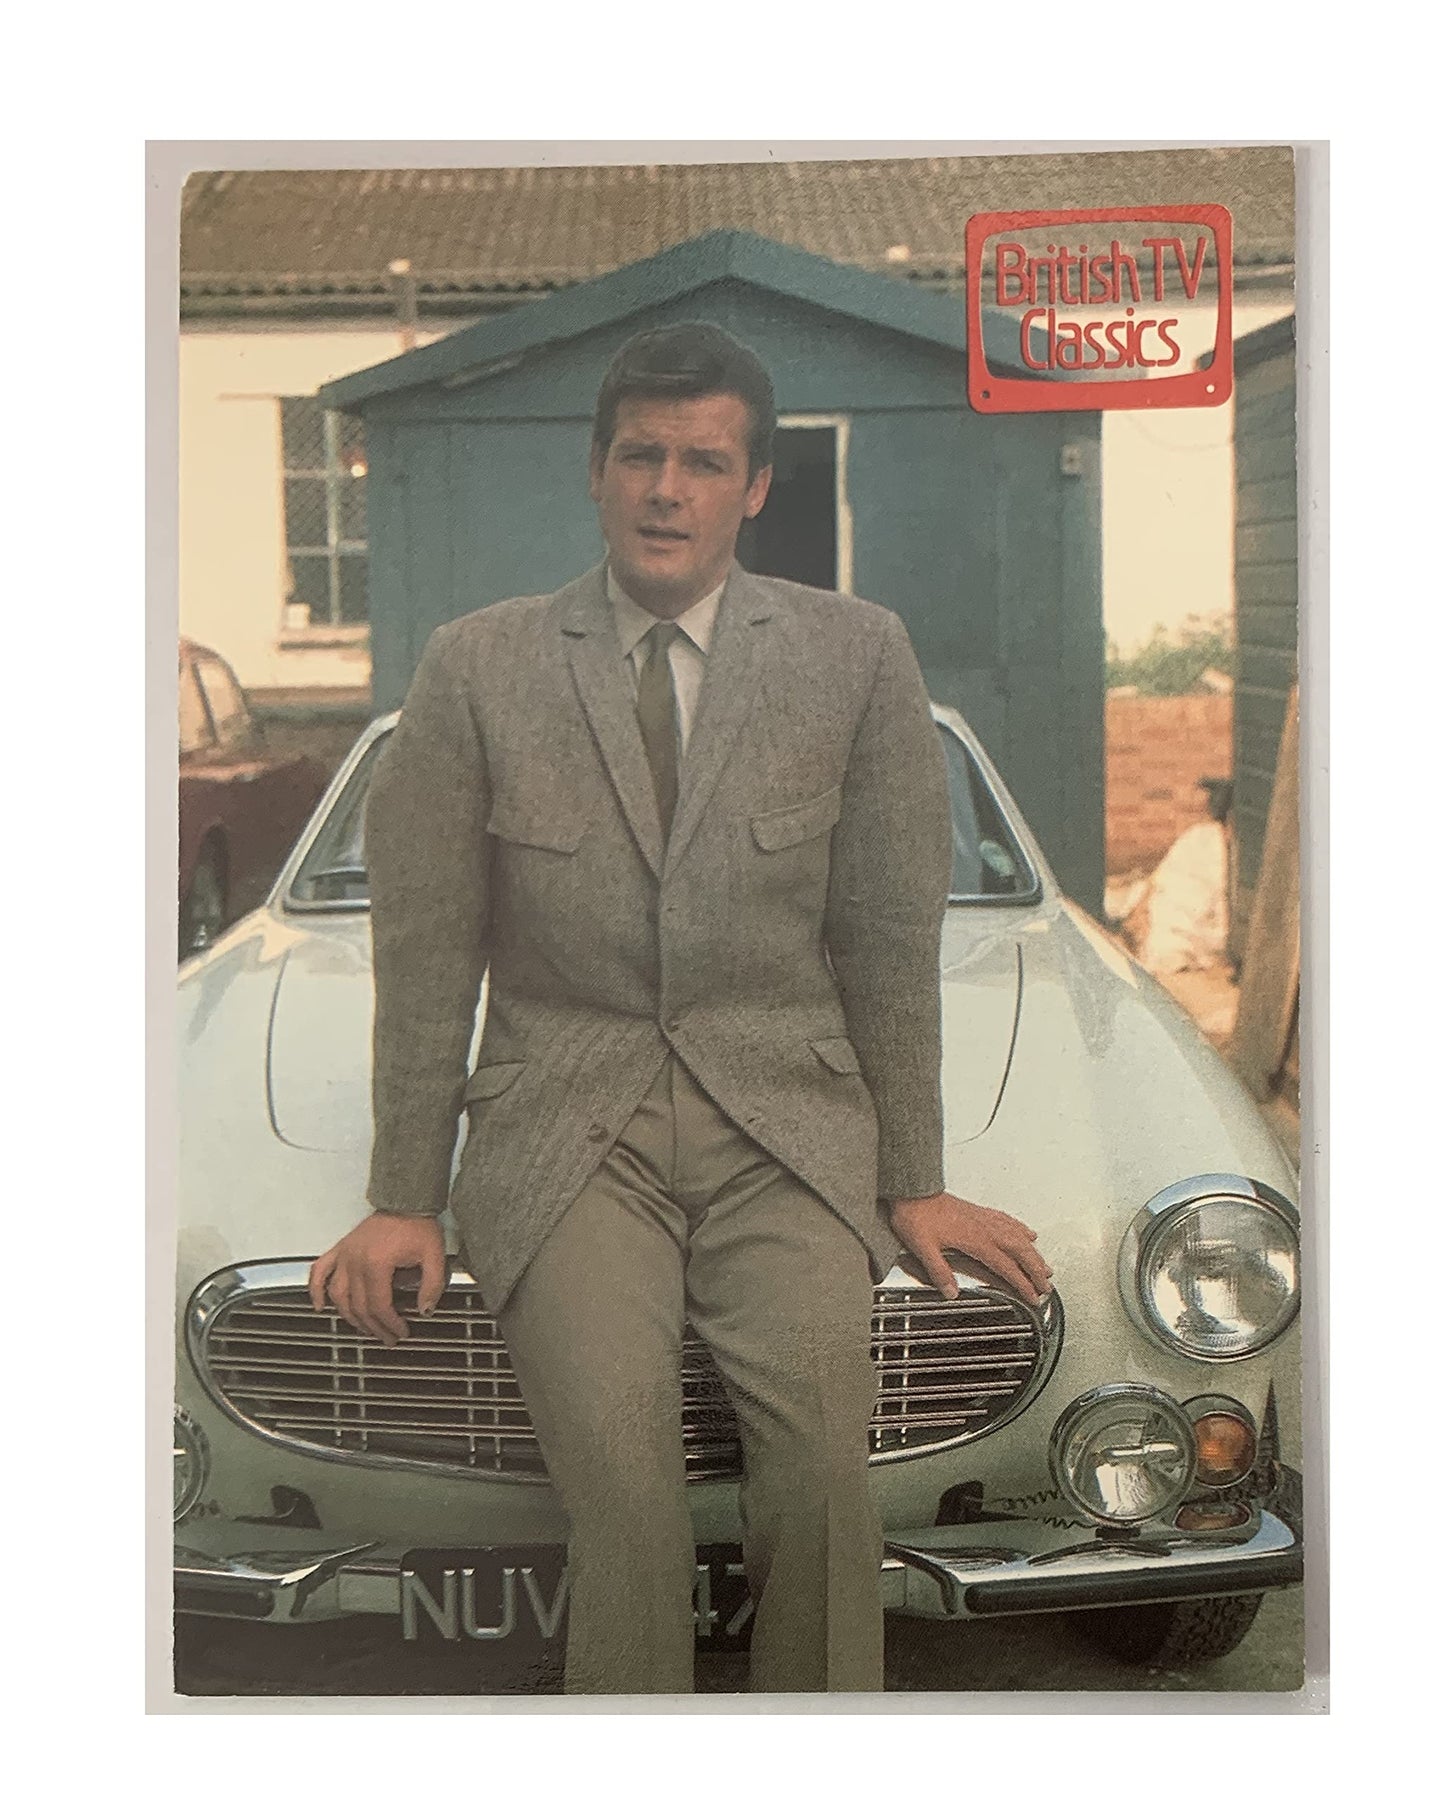 Vintage 1989 British TV Classics : The Saint - Roger Moore Stars As Simon Templar Photograph Postcard By Engale Marketing - Unsold Shop Stock